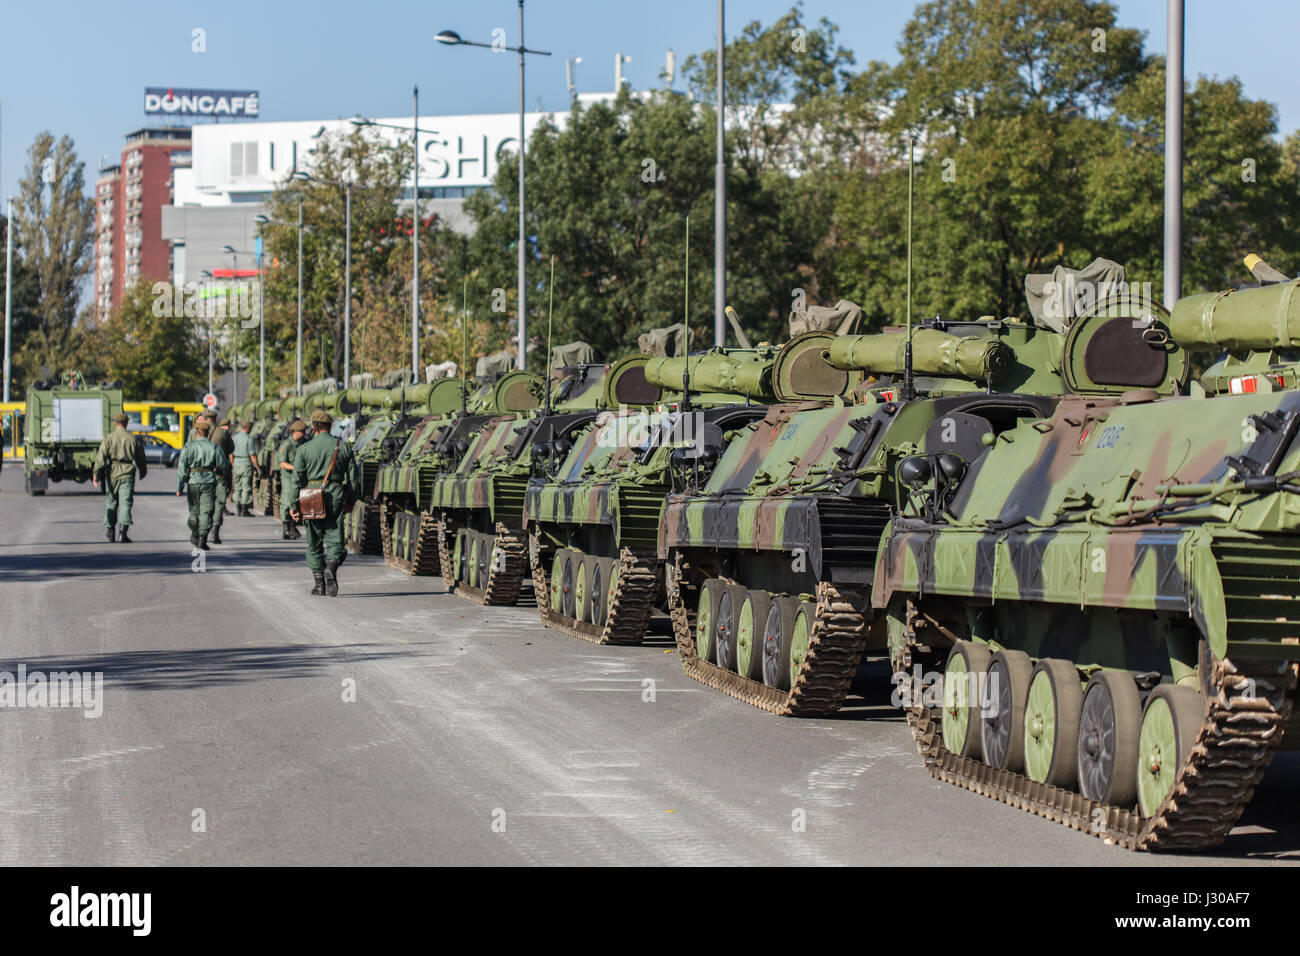 belgrade-serbia-october-9-2014-tanks-on-street-of-belgrade-at-usce-J30AF7.jpg